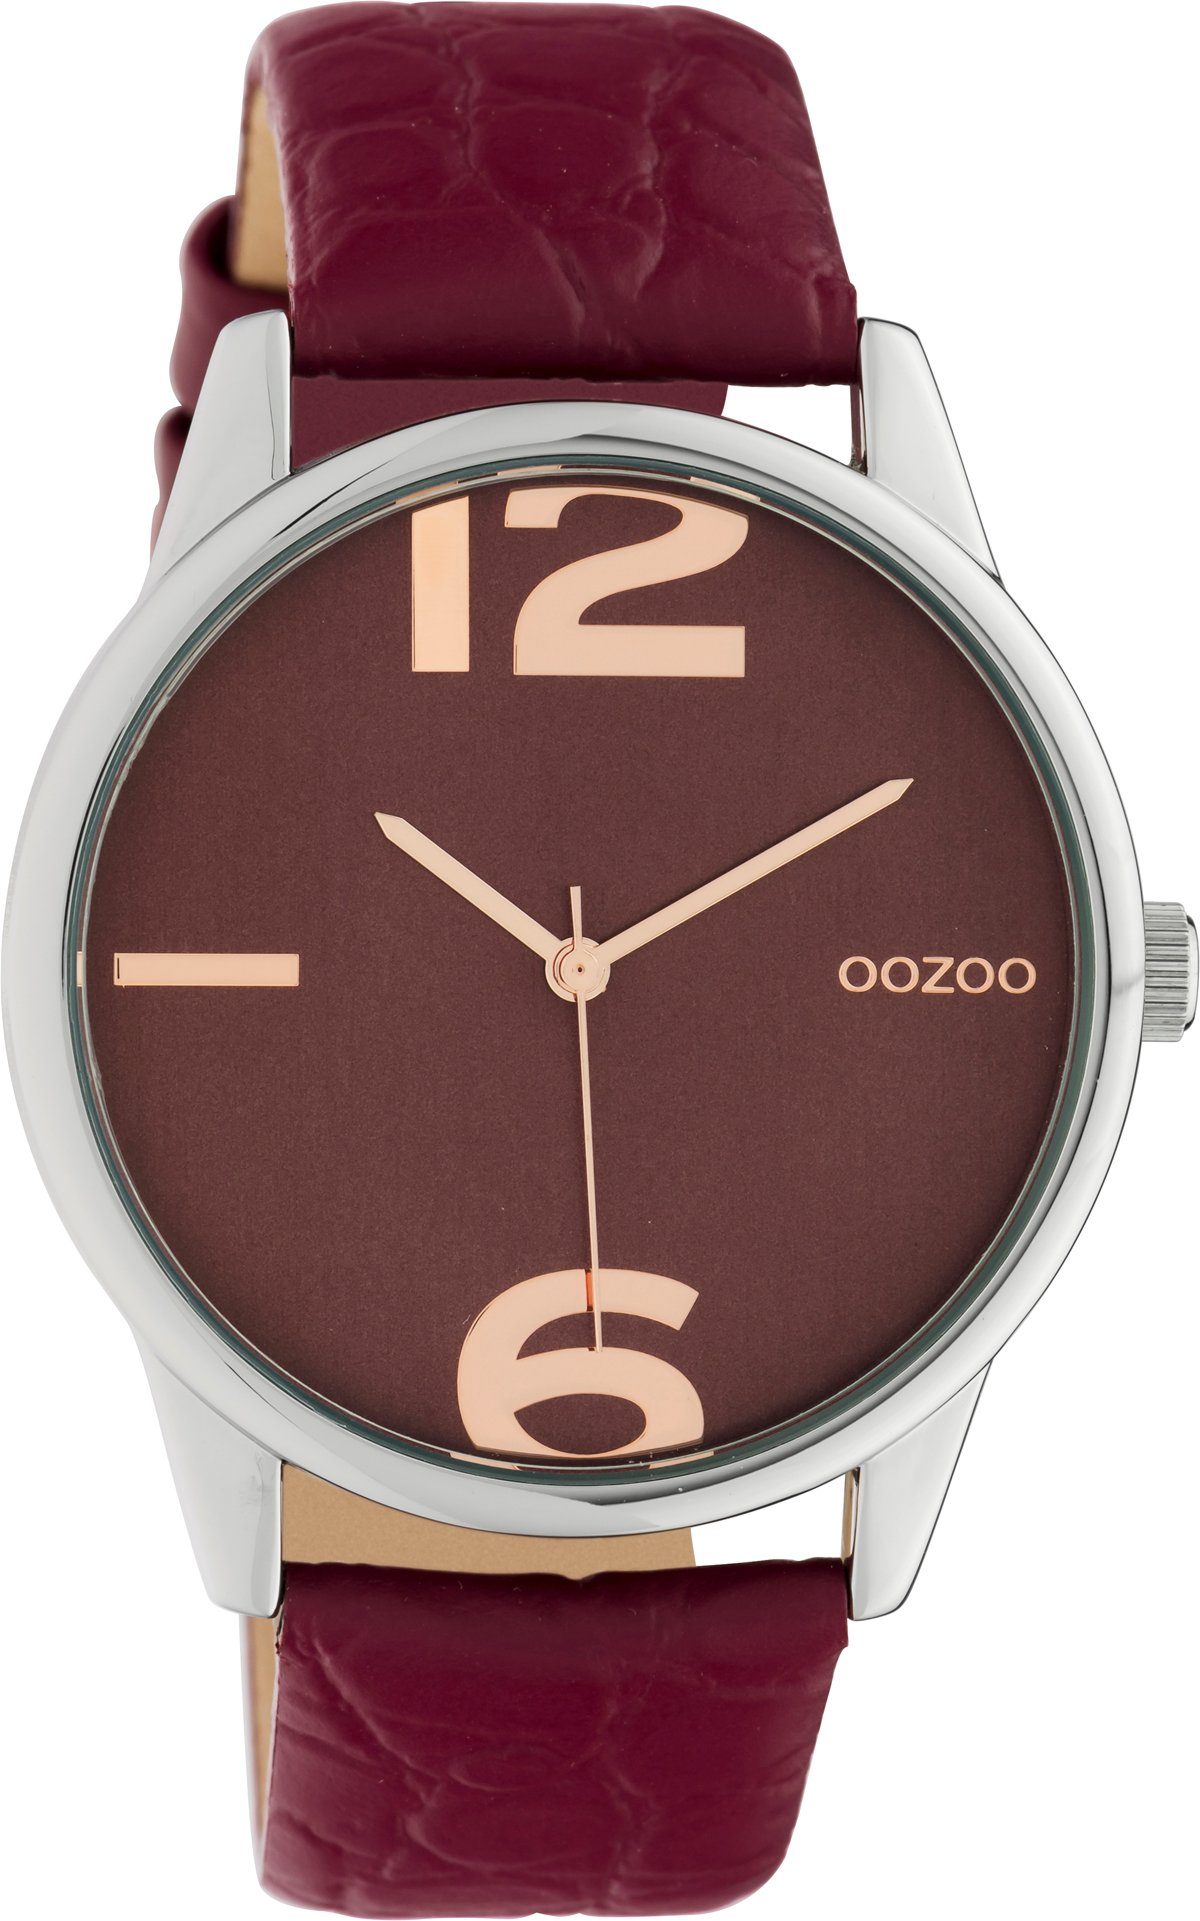 OOZOO Quarzuhr Damen Uhr C10378 Armbanduhr Weinrot Lederband 40 mm